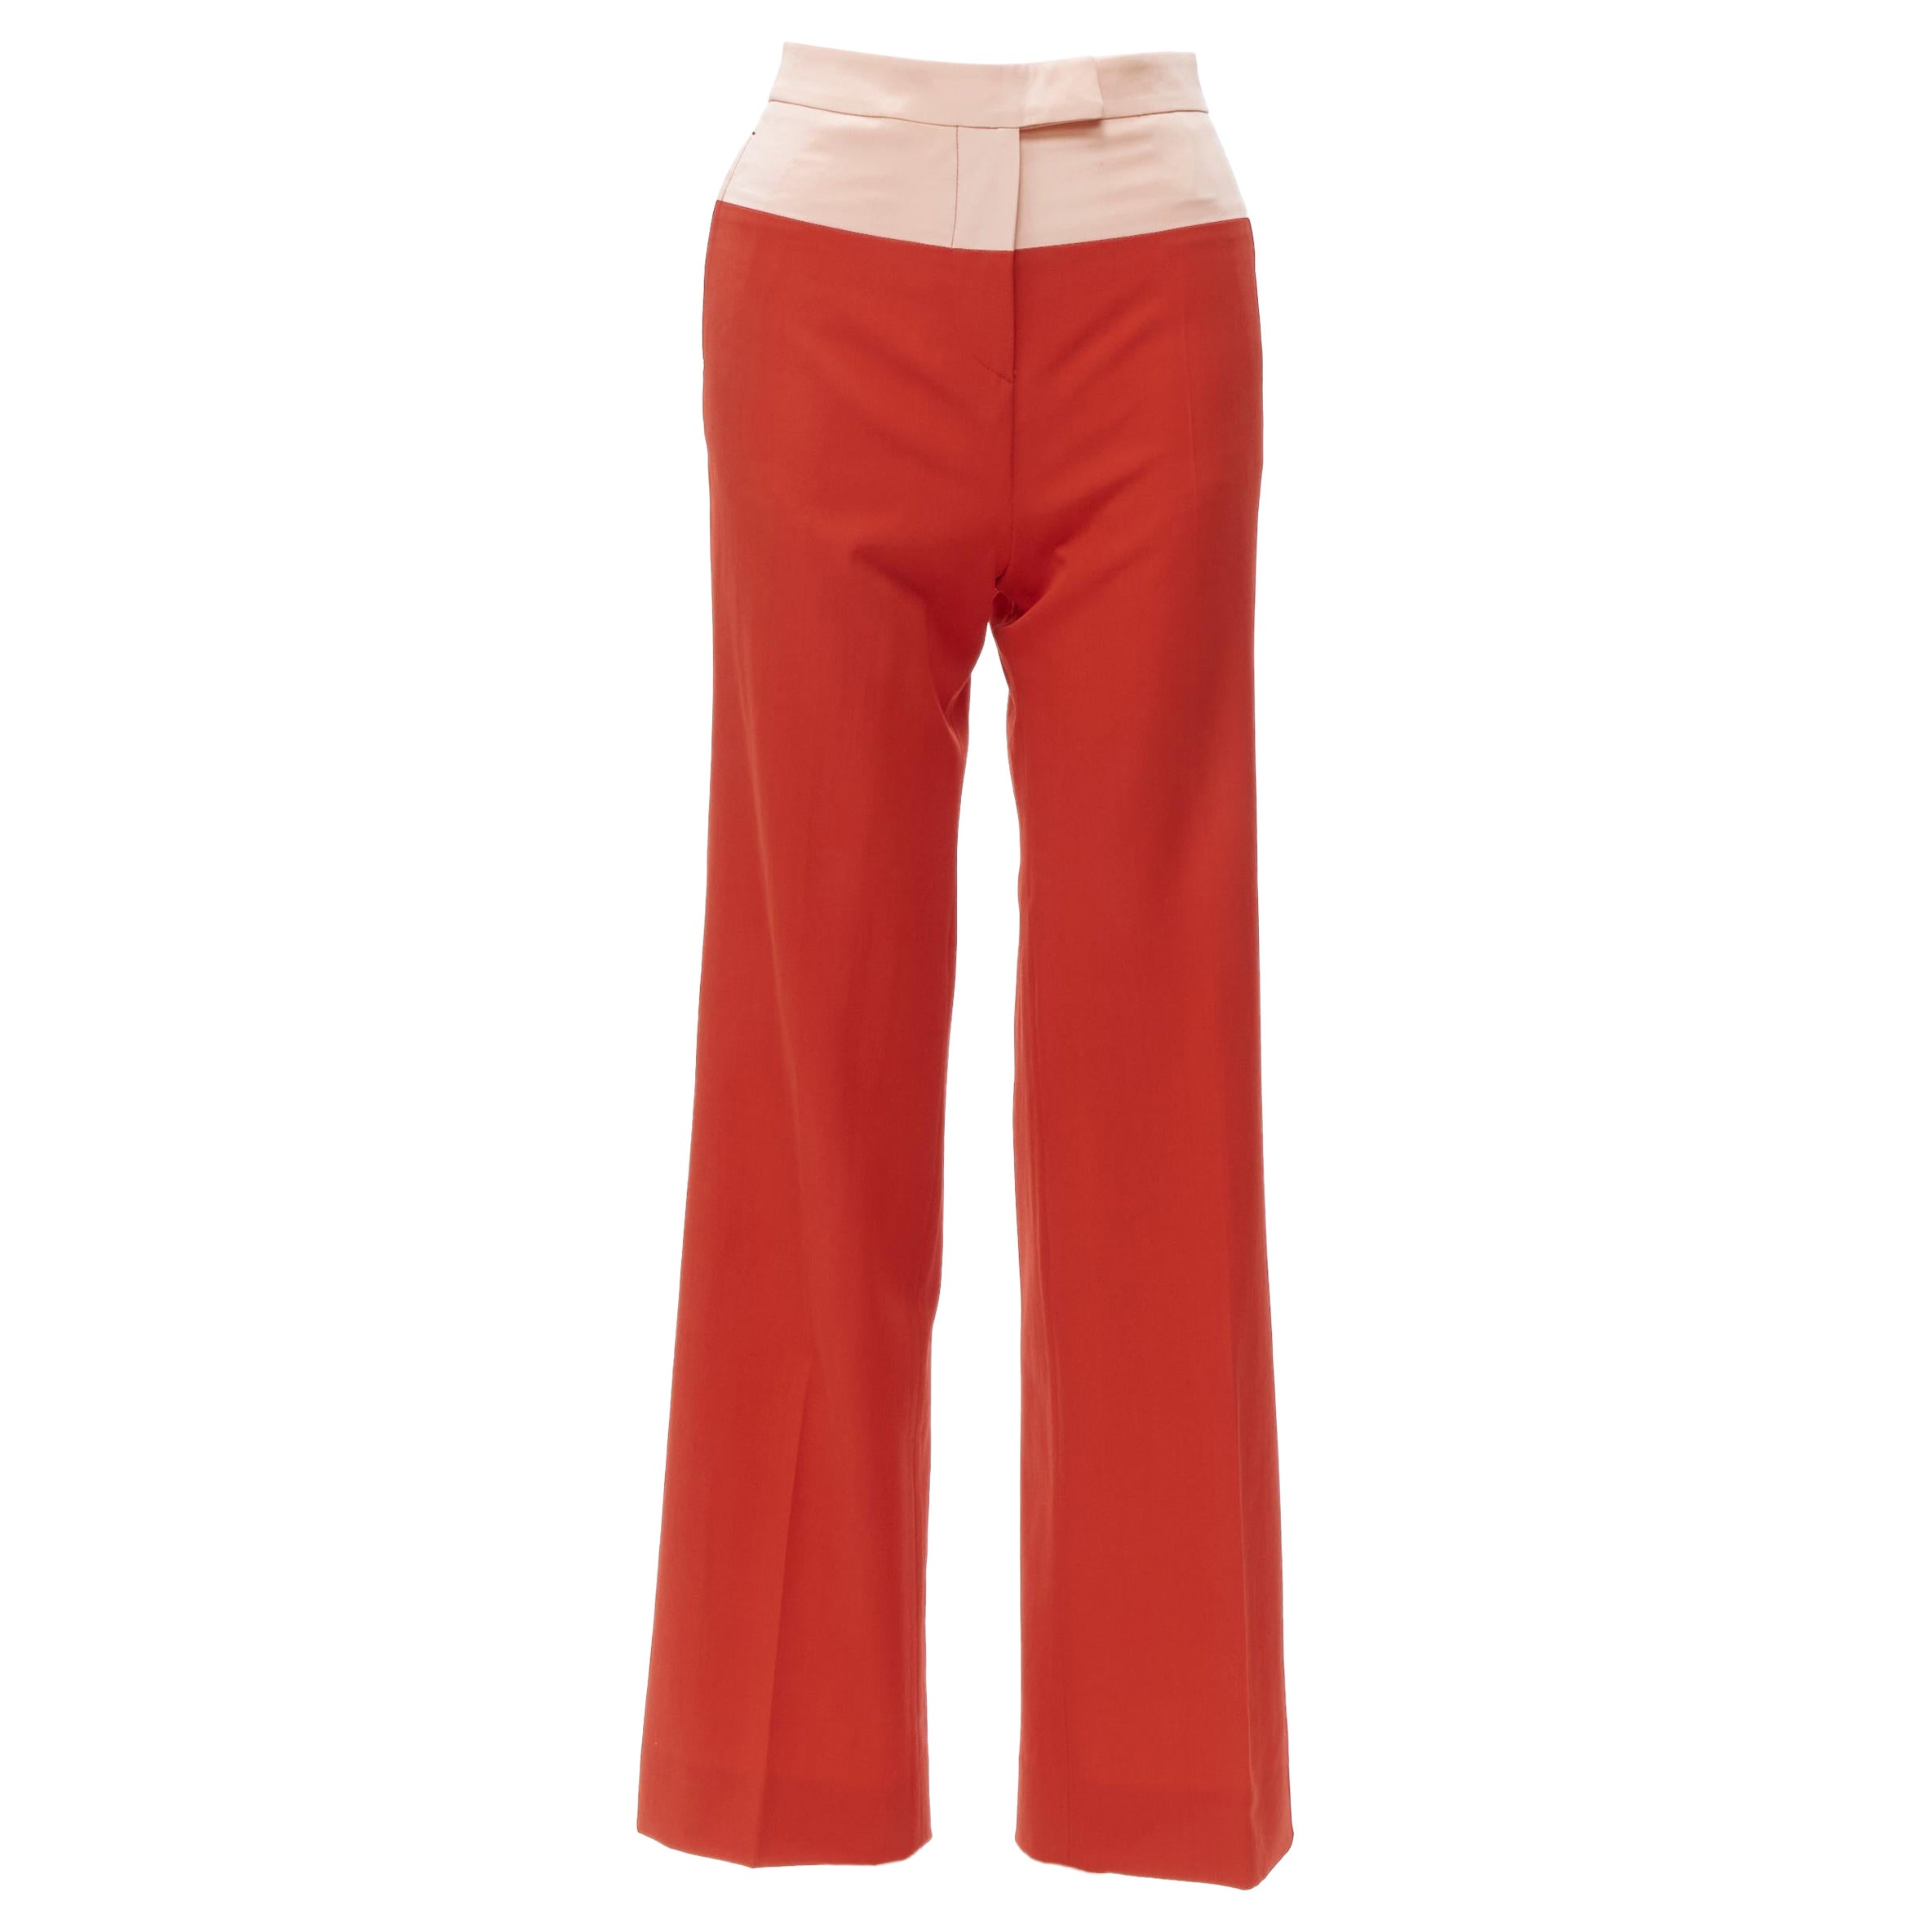 BOTTEGA VENETA 100% wool nude beige red colorblocked wide leg pants IT38 XS For Sale